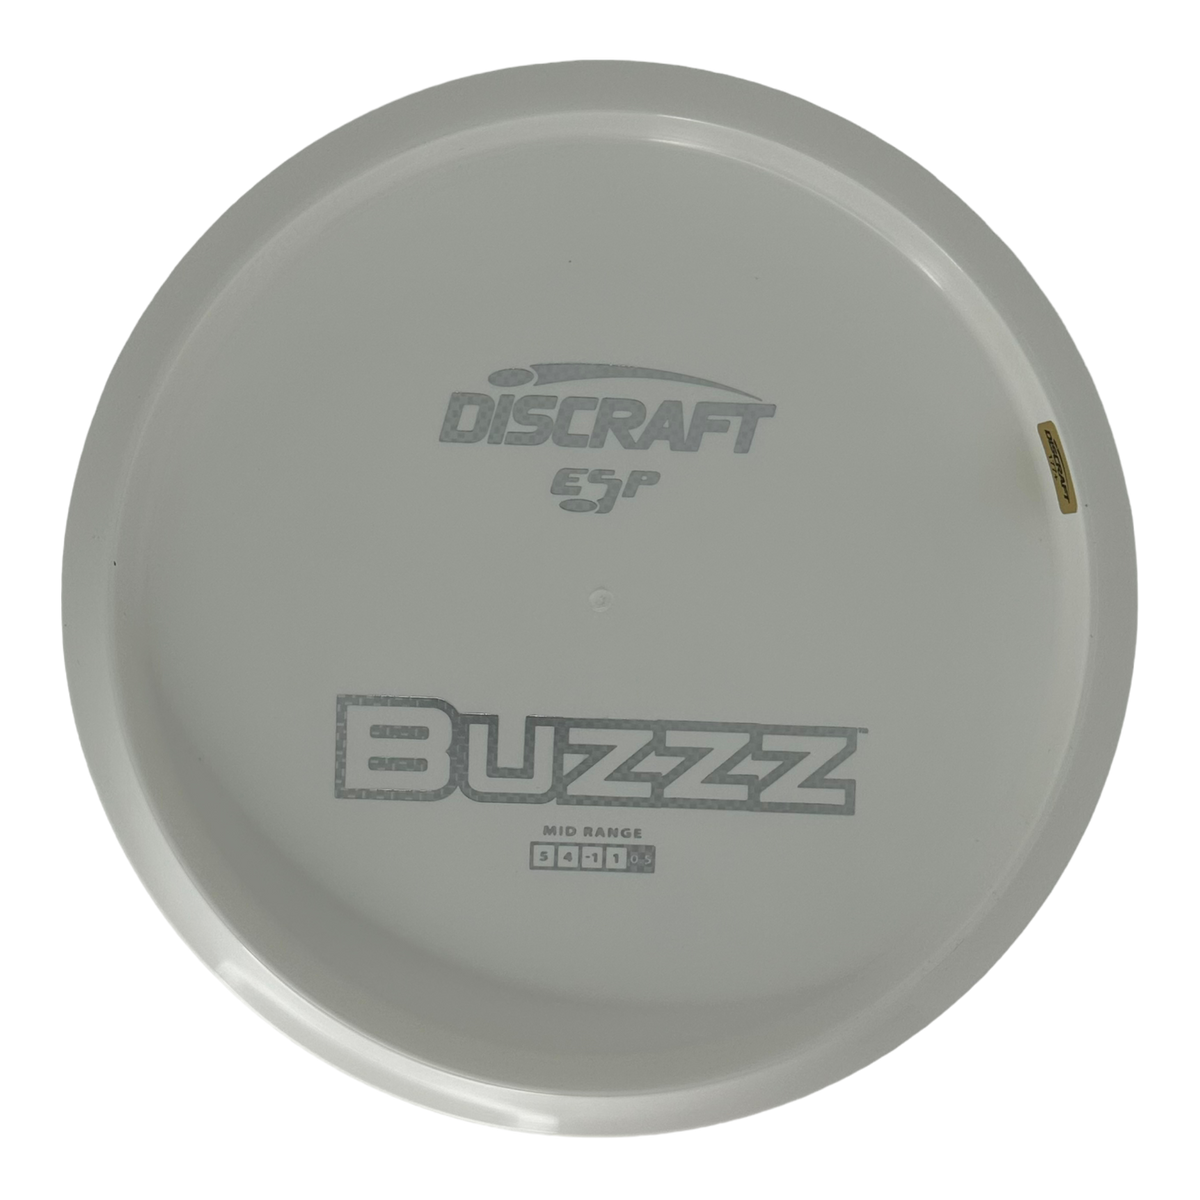 Discraft White ESP Buzz - Bottom Stamp